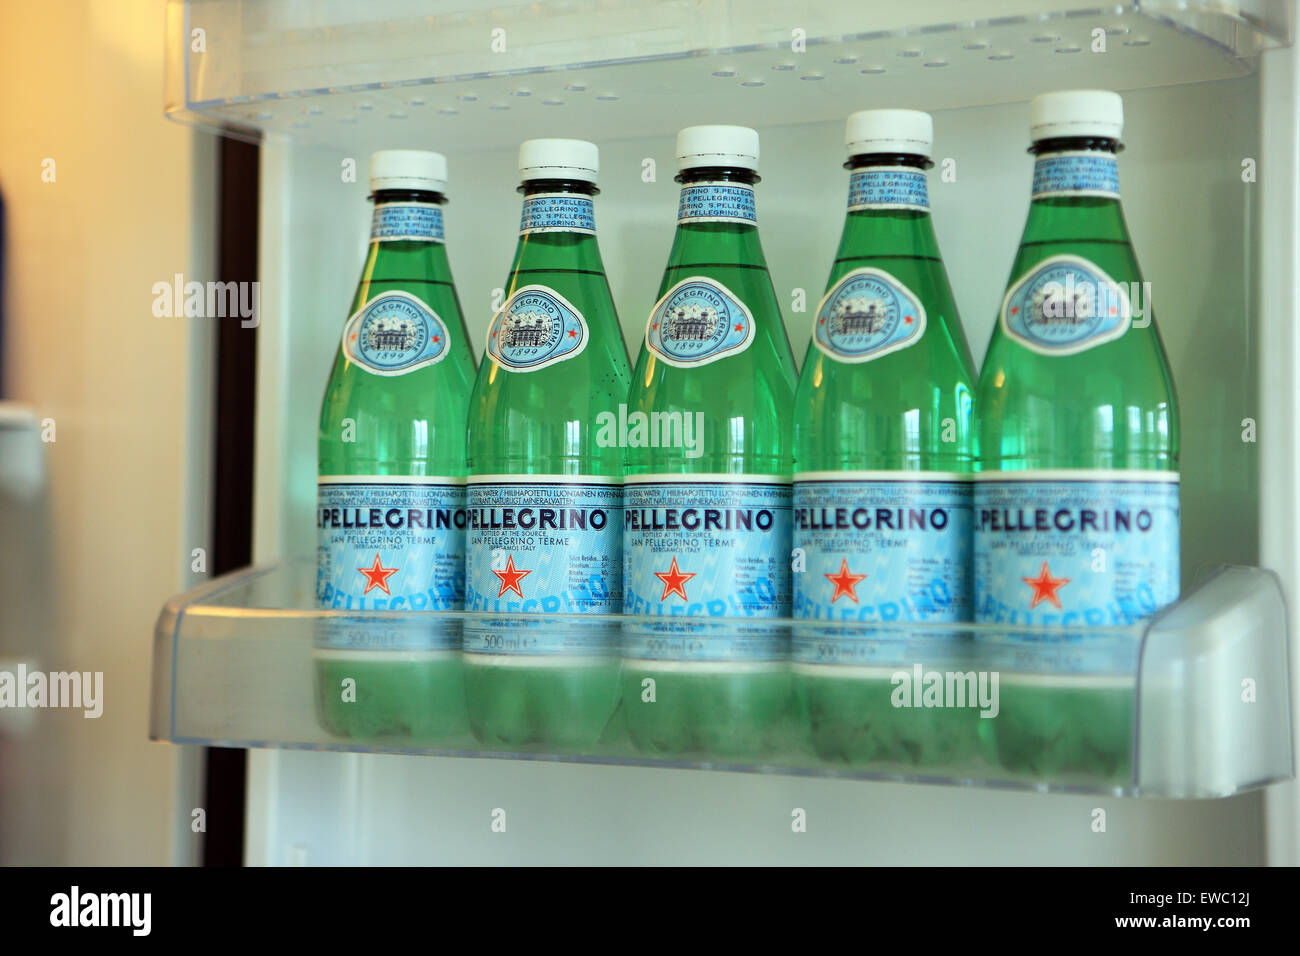 https://c8.alamy.com/comp/EWC12J/bottles-of-san-pellegrino-sparking-water-in-a-fridge-EWC12J.jpg